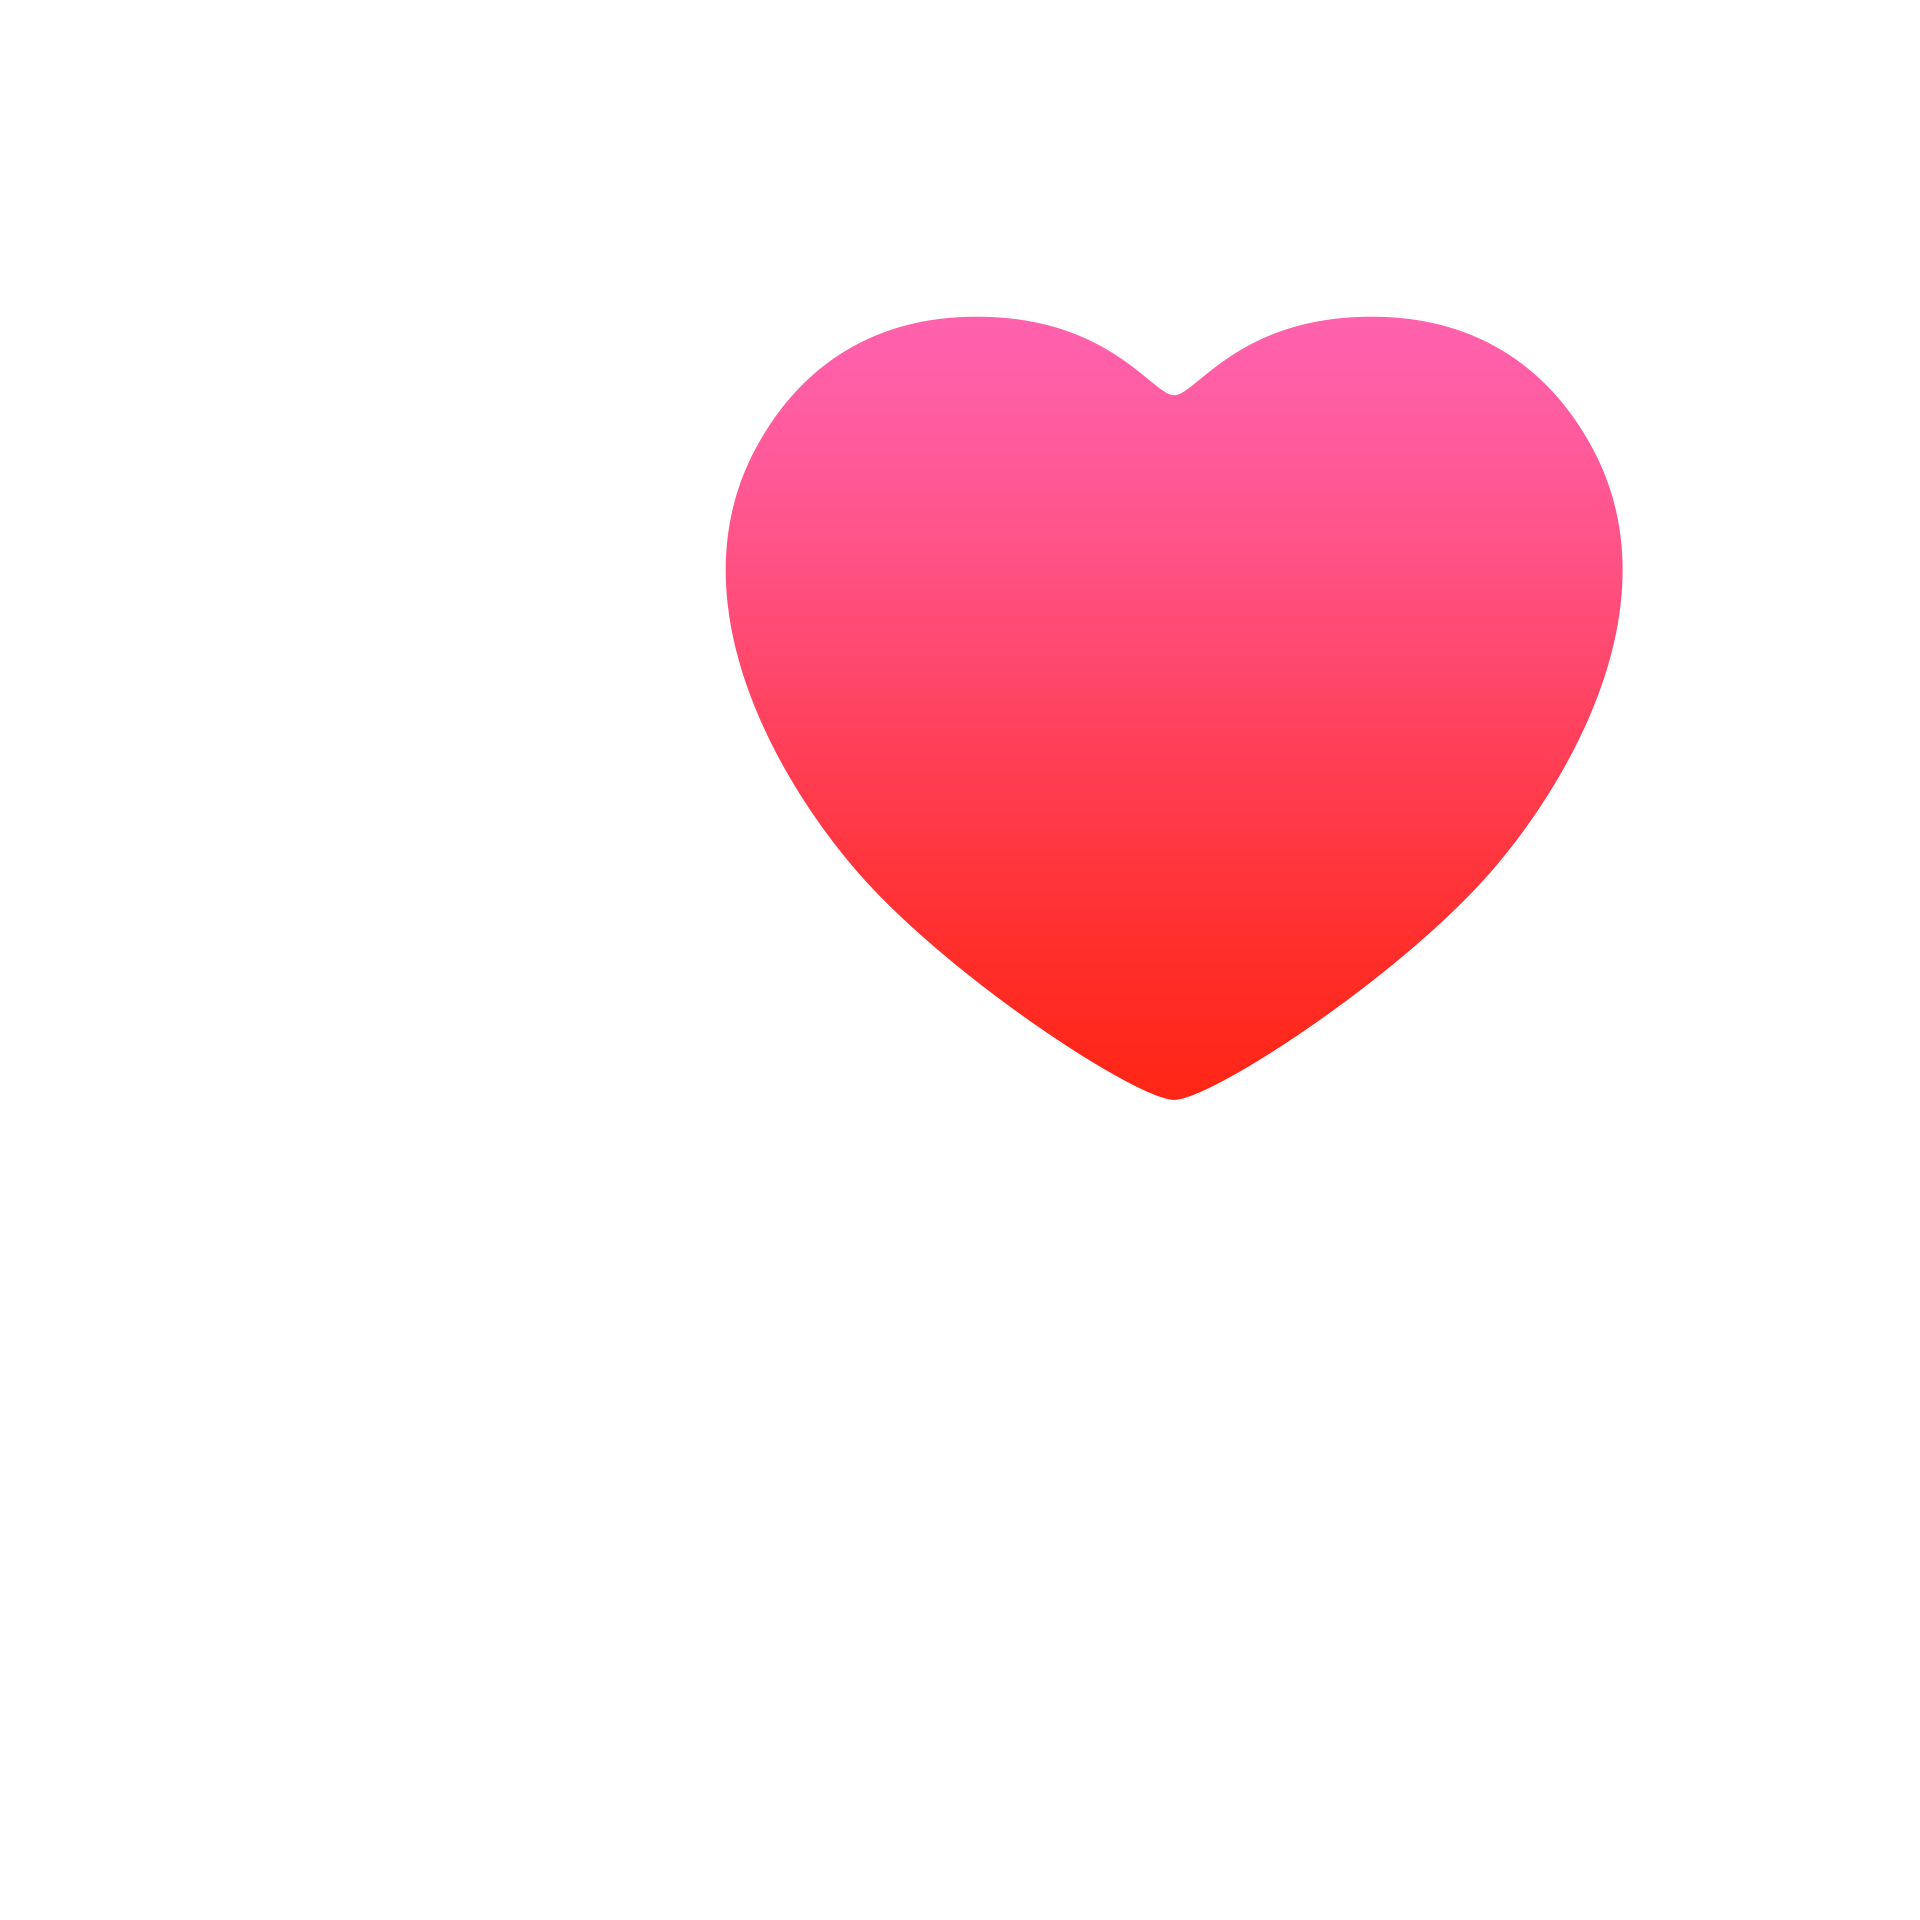 Heart 'Health app symbol' on iPhone home screen